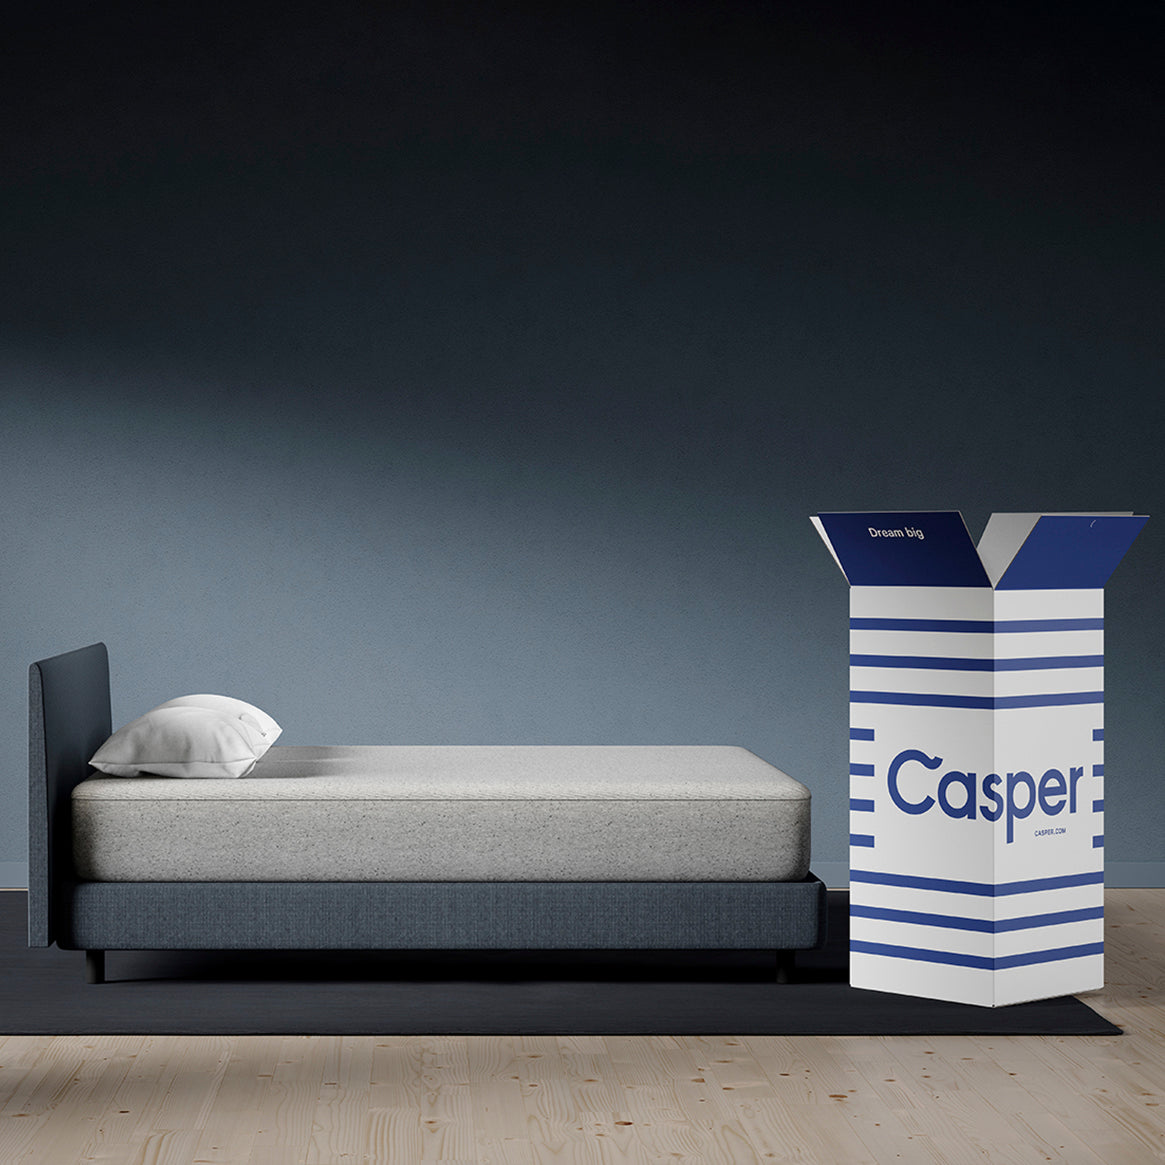 Casper Original Foam Mattress On Bed In Bedroom With Box Packaging